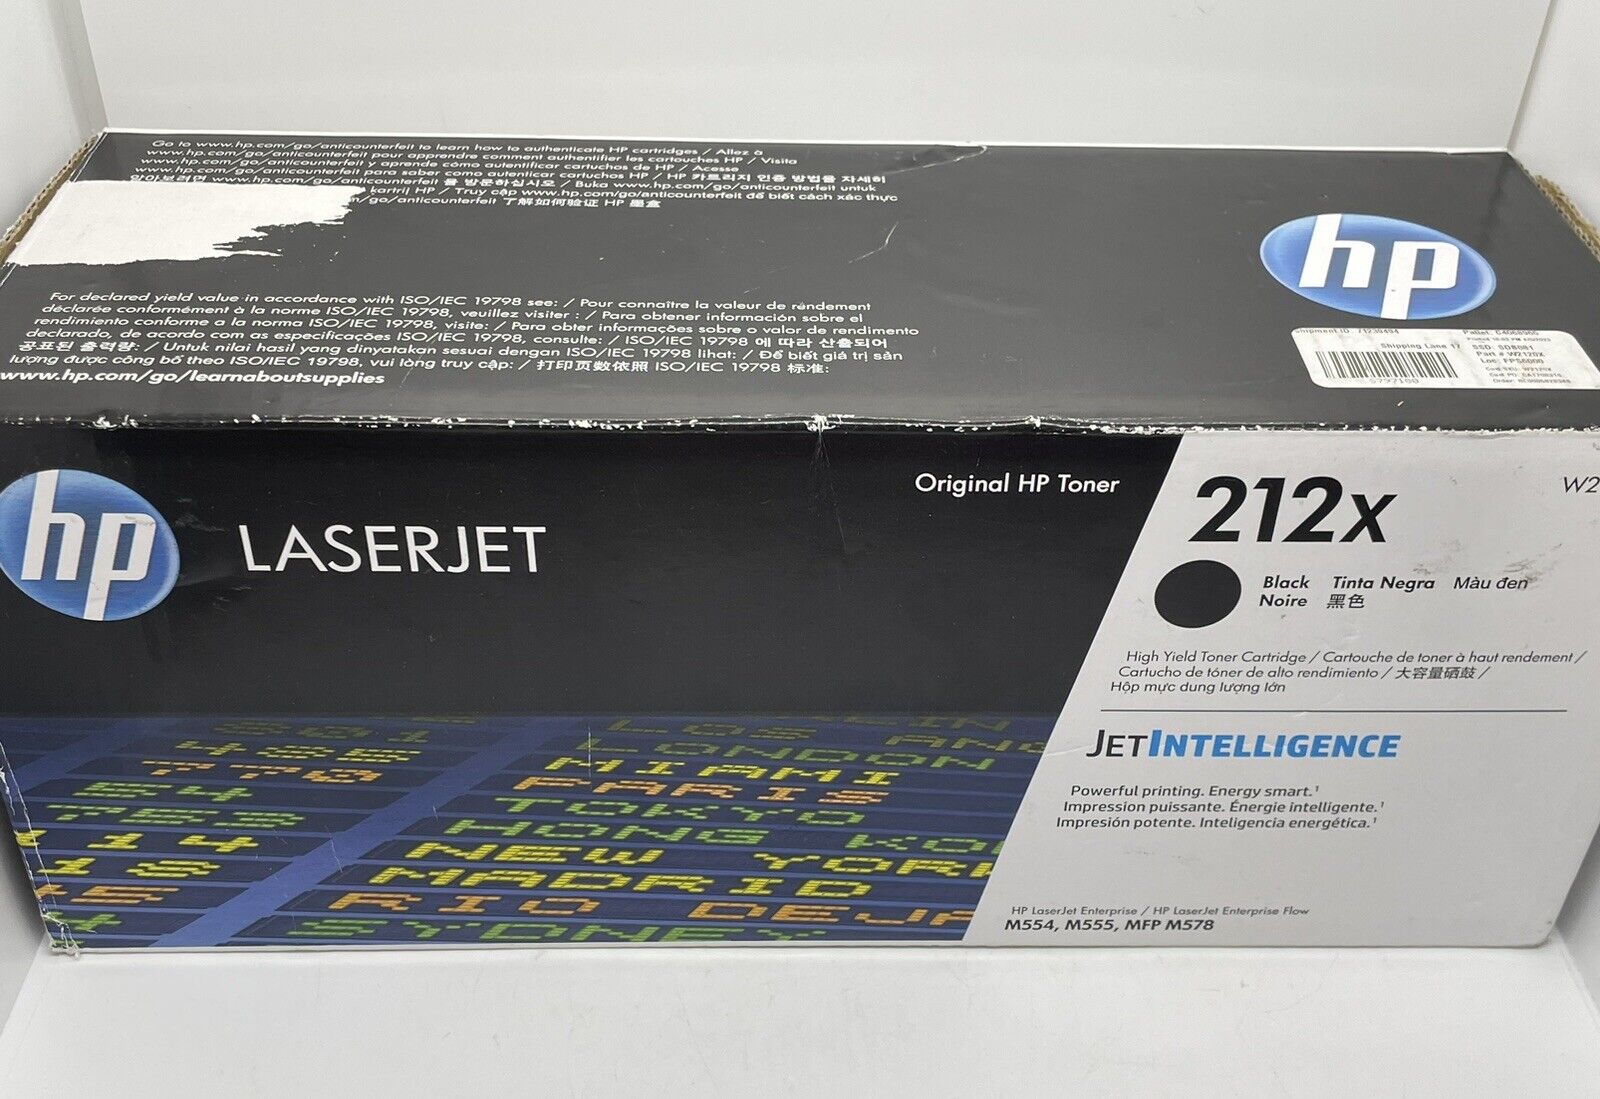 Genuine HP LaserJet 212X Black Toner Cartridge W2120X **EMPTY - PARTS ONLY**